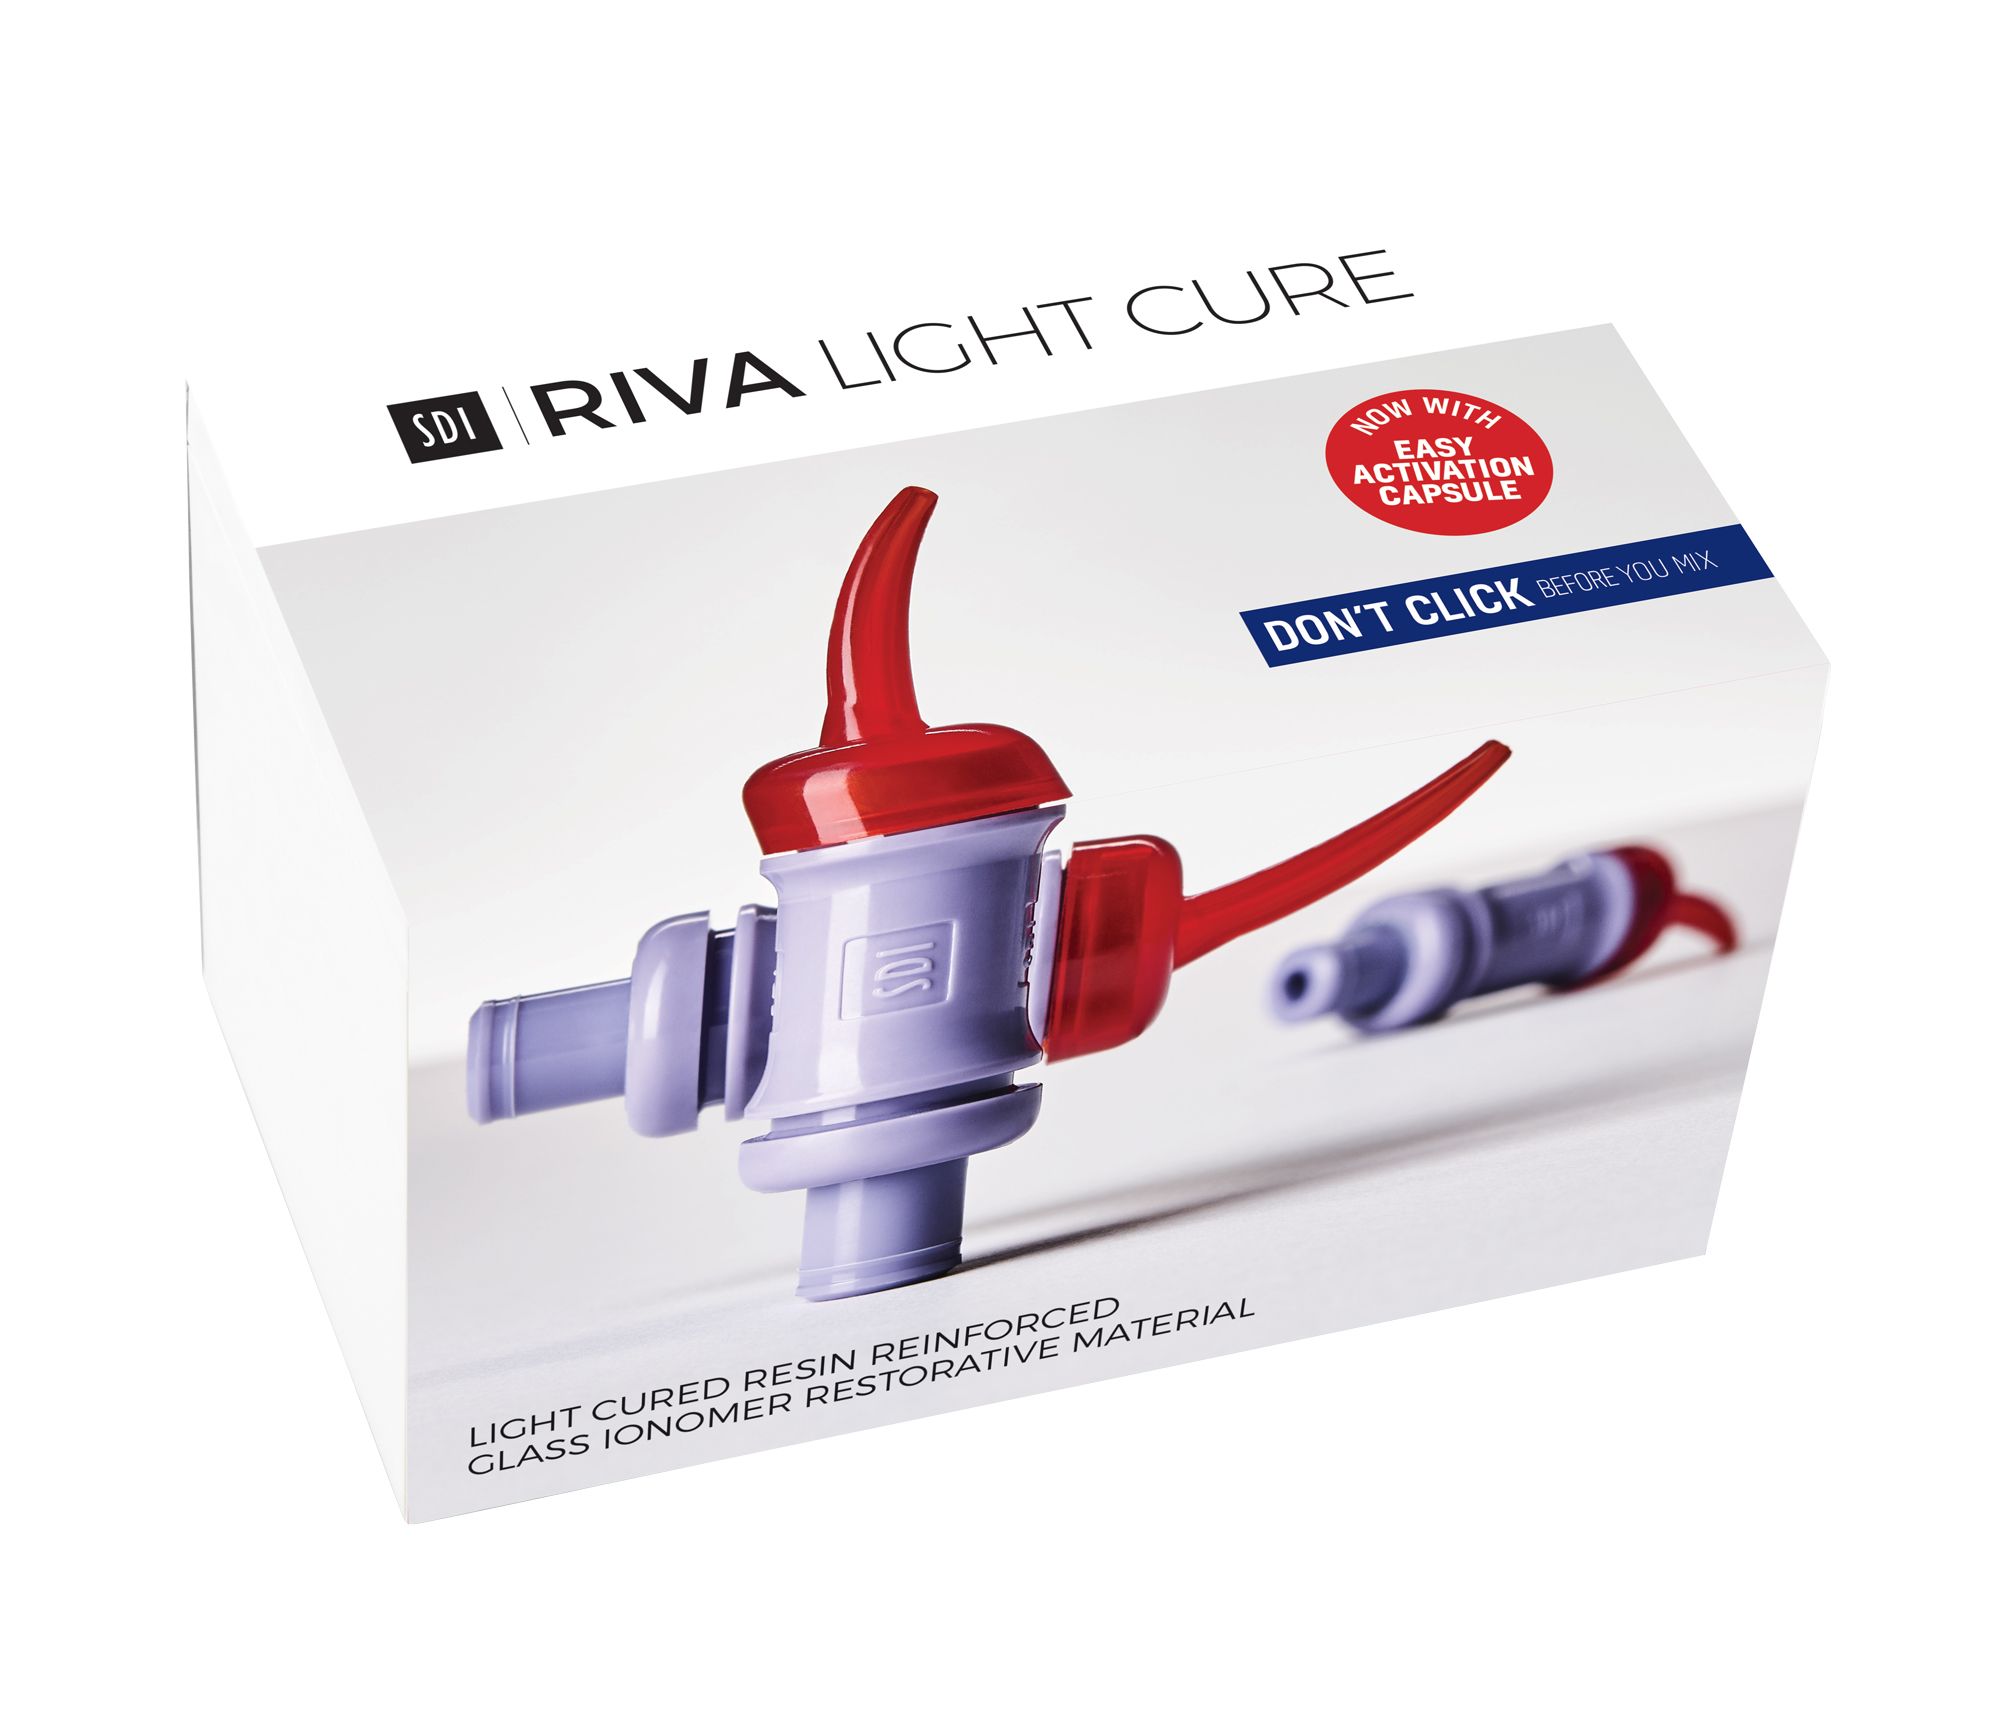 Riva Light Cure from SDI